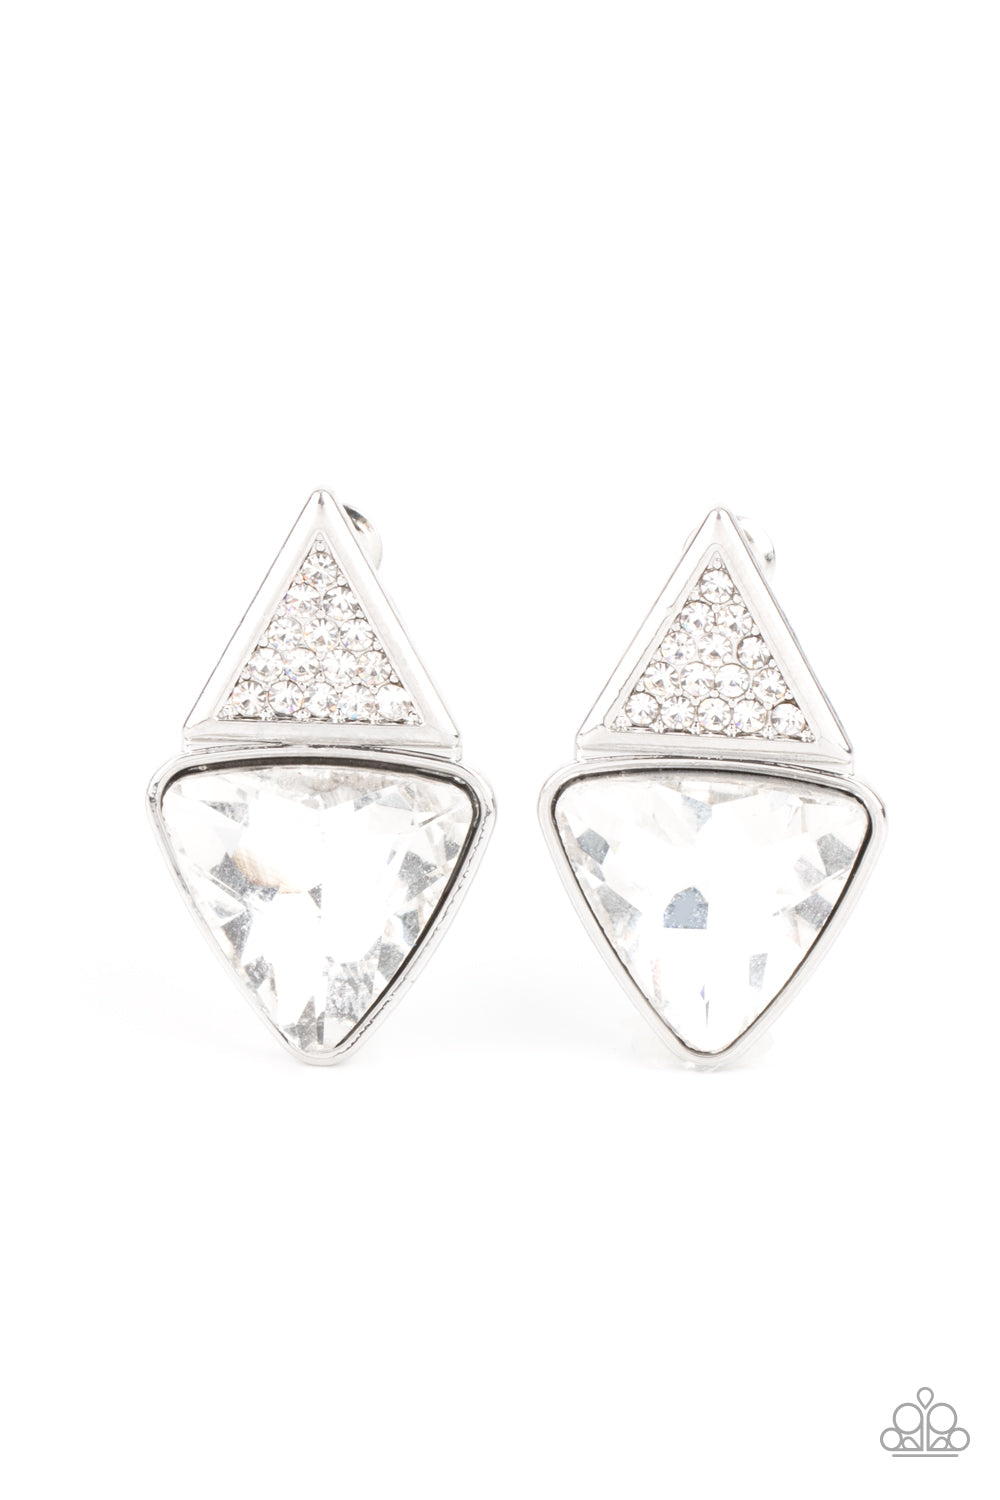 Risky Razzle - White Pyramid Earrings - Paparazzi Accessories 